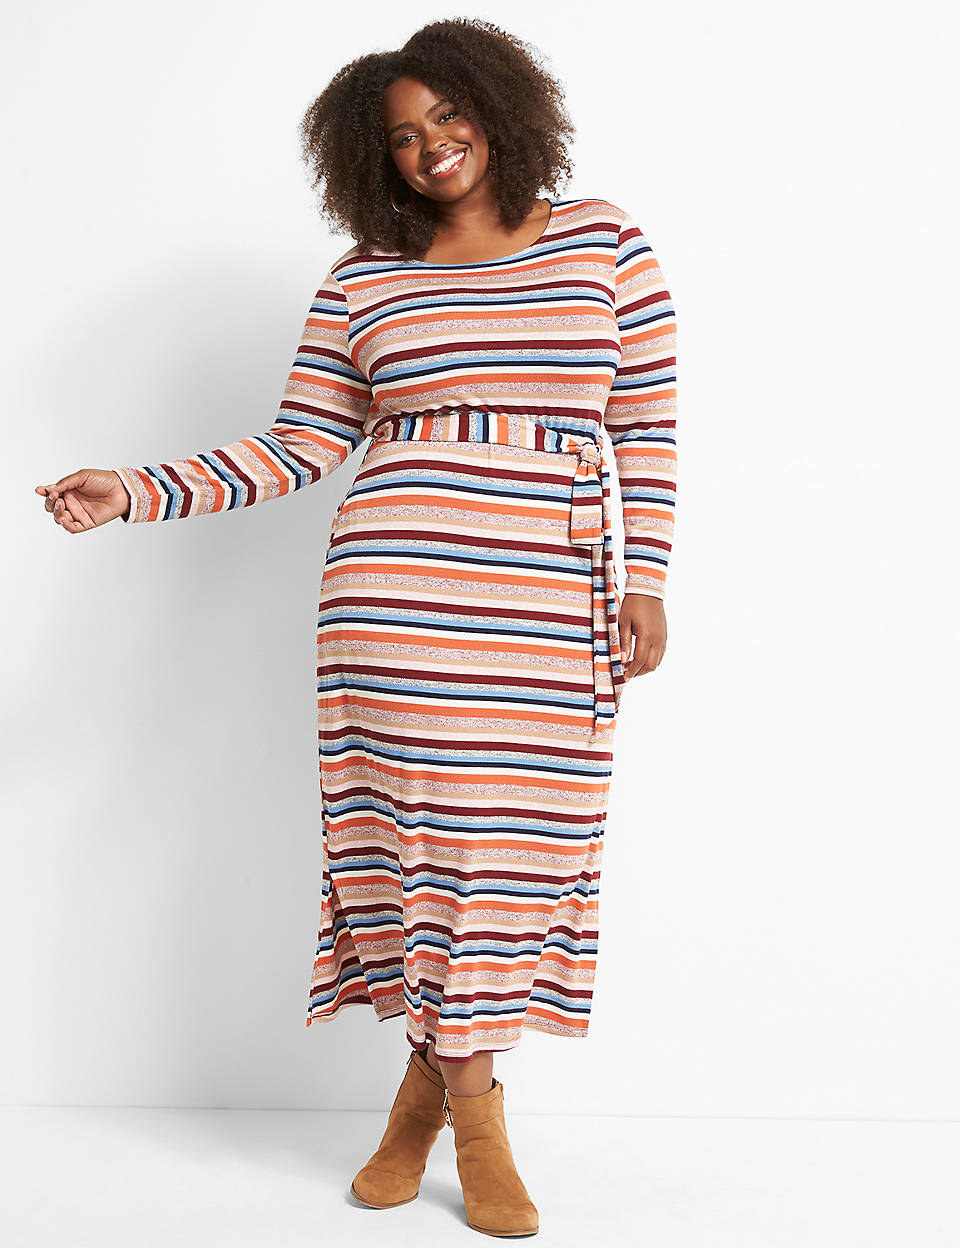 model wearing the midi dress withe orange, purple, blue, and tan horizontal stripes